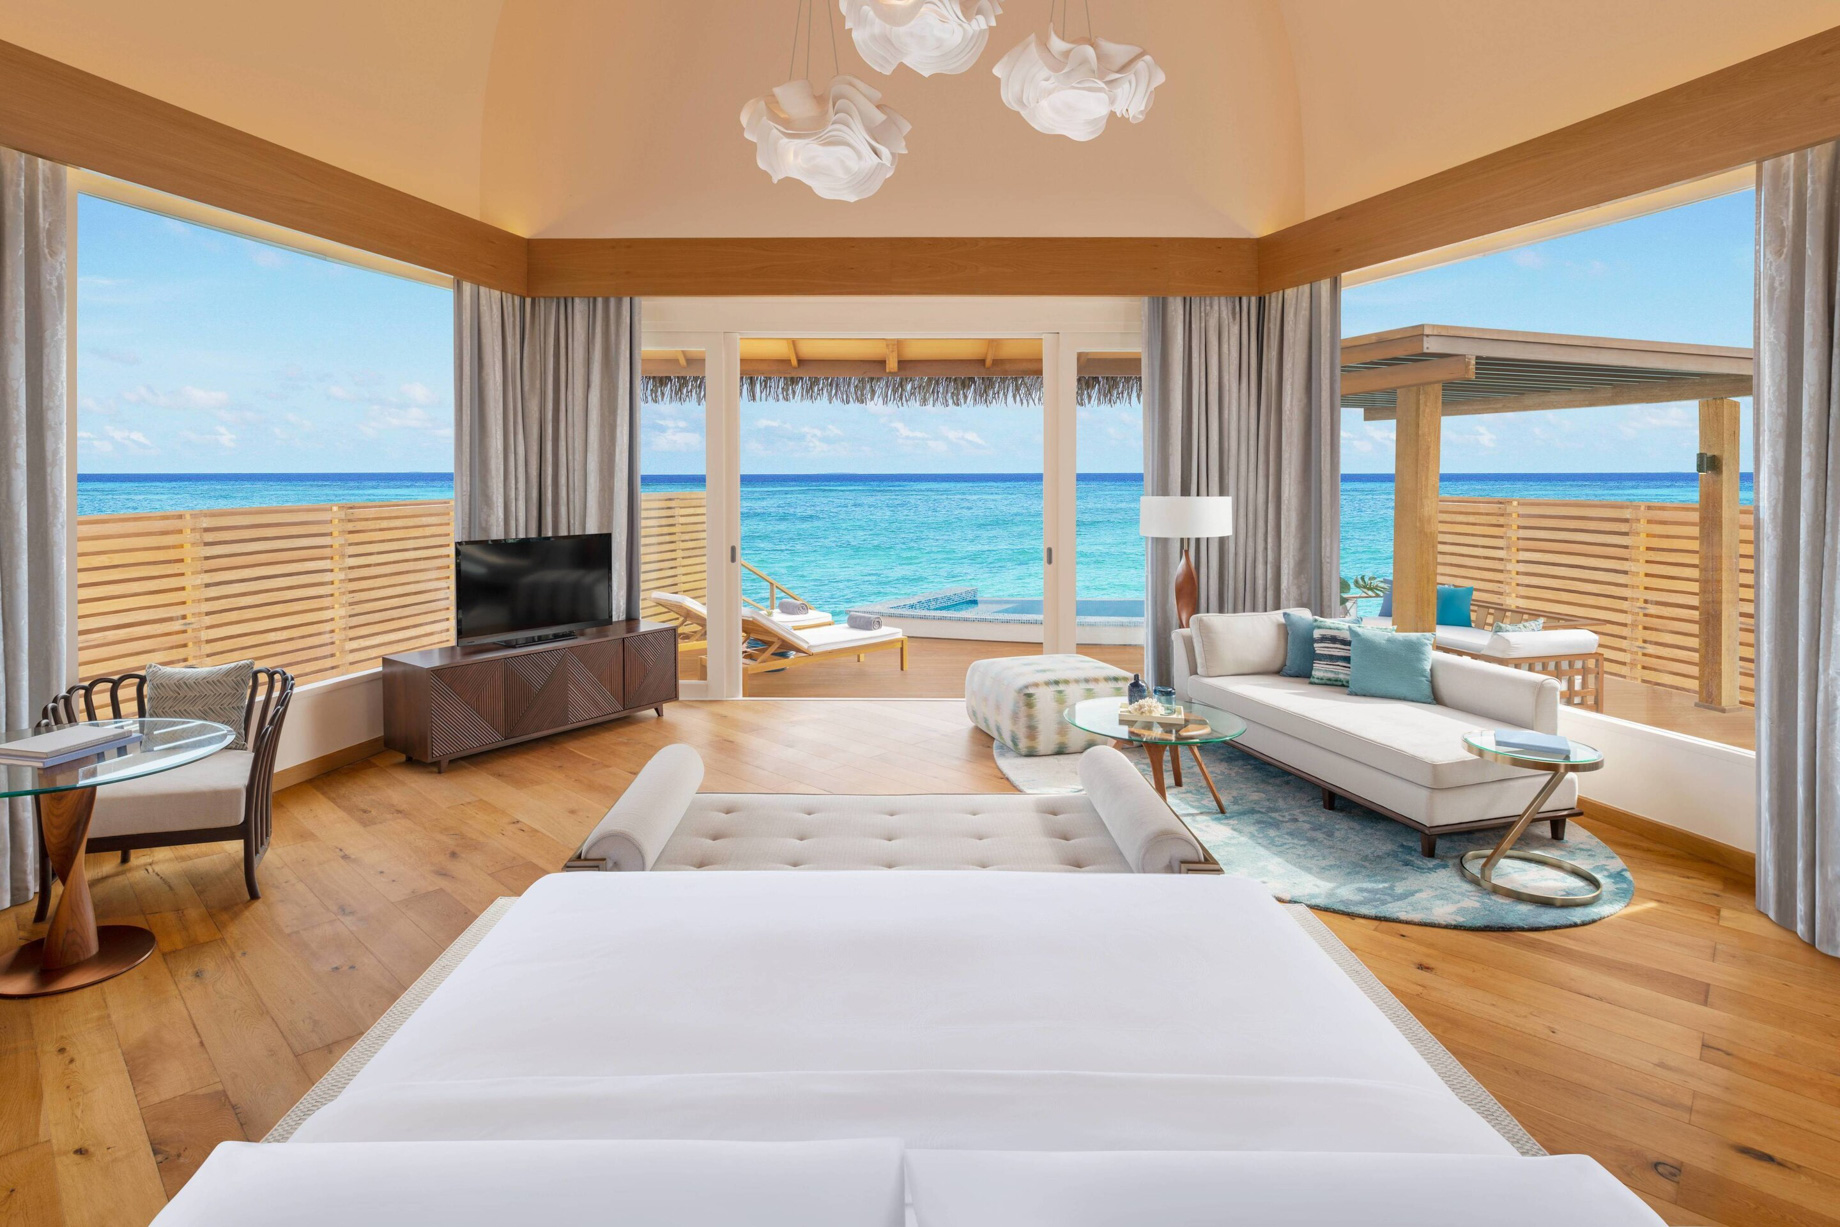 JW Marriott Maldives Resort & Spa - Shaviyani Atoll, Maldives - Overwater Pool Villa Sunset Bedroom